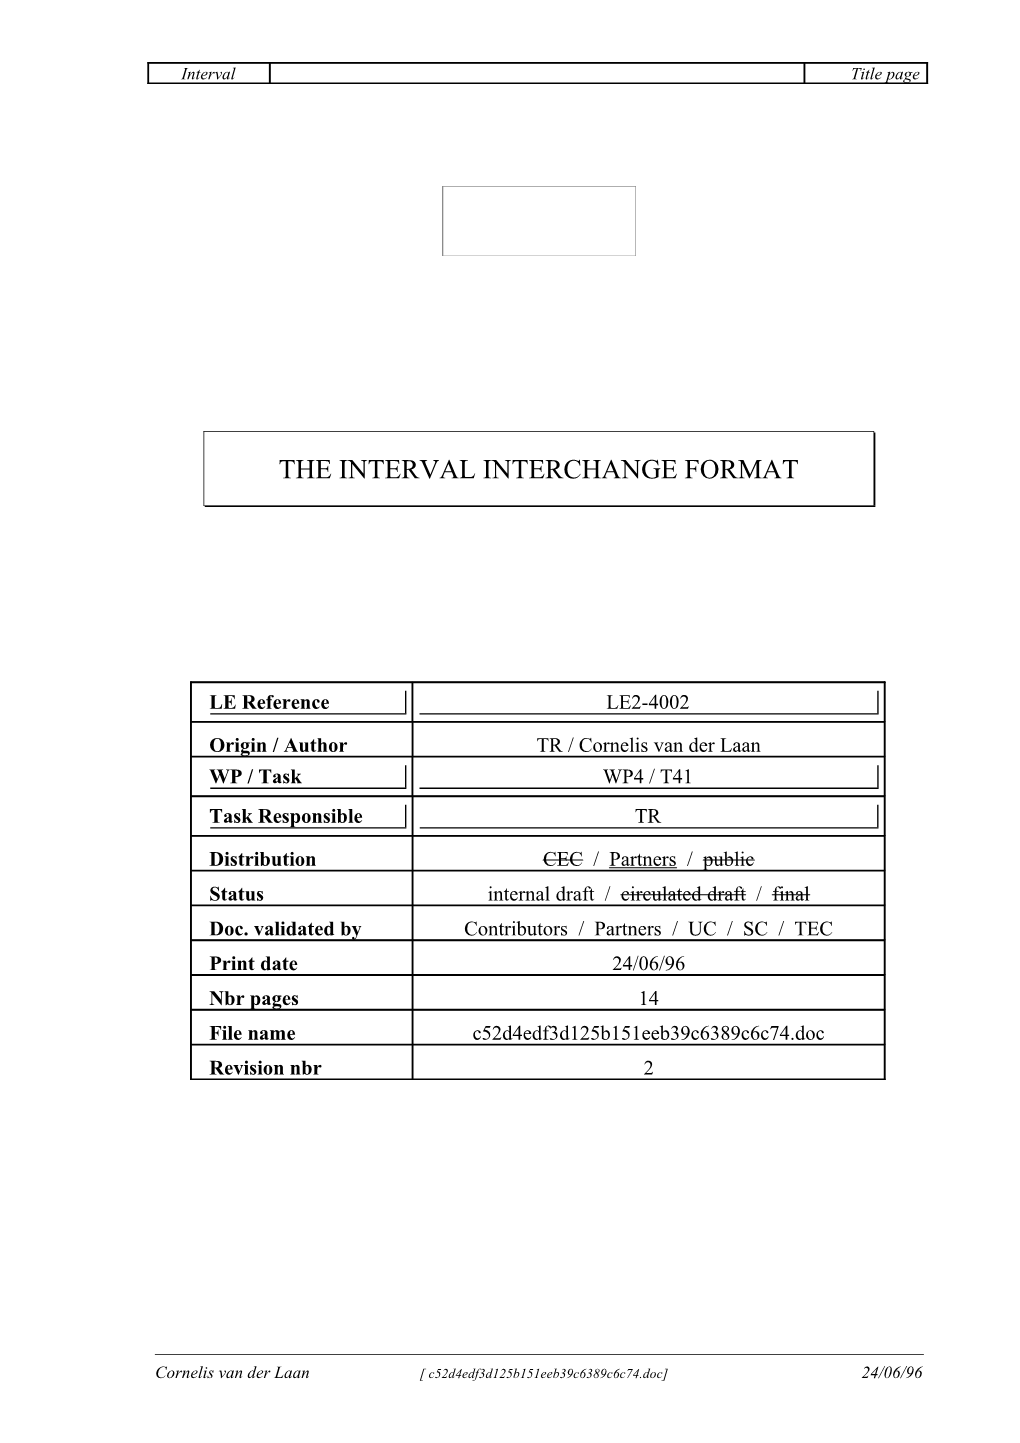 The Interval Interchange Format